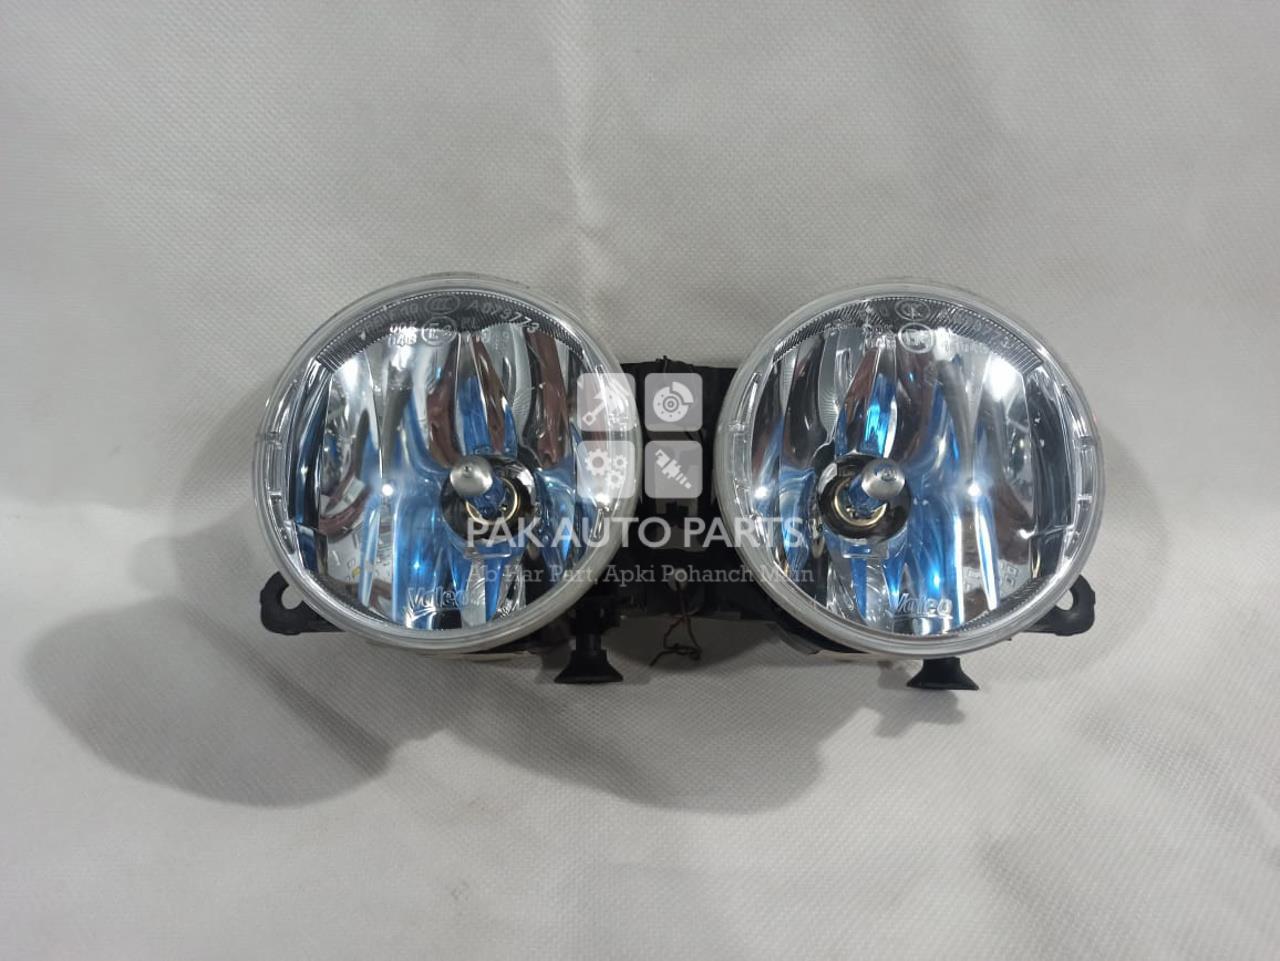 Picture of Suzuki Alto RS Turbo Fog Light (Lamp)